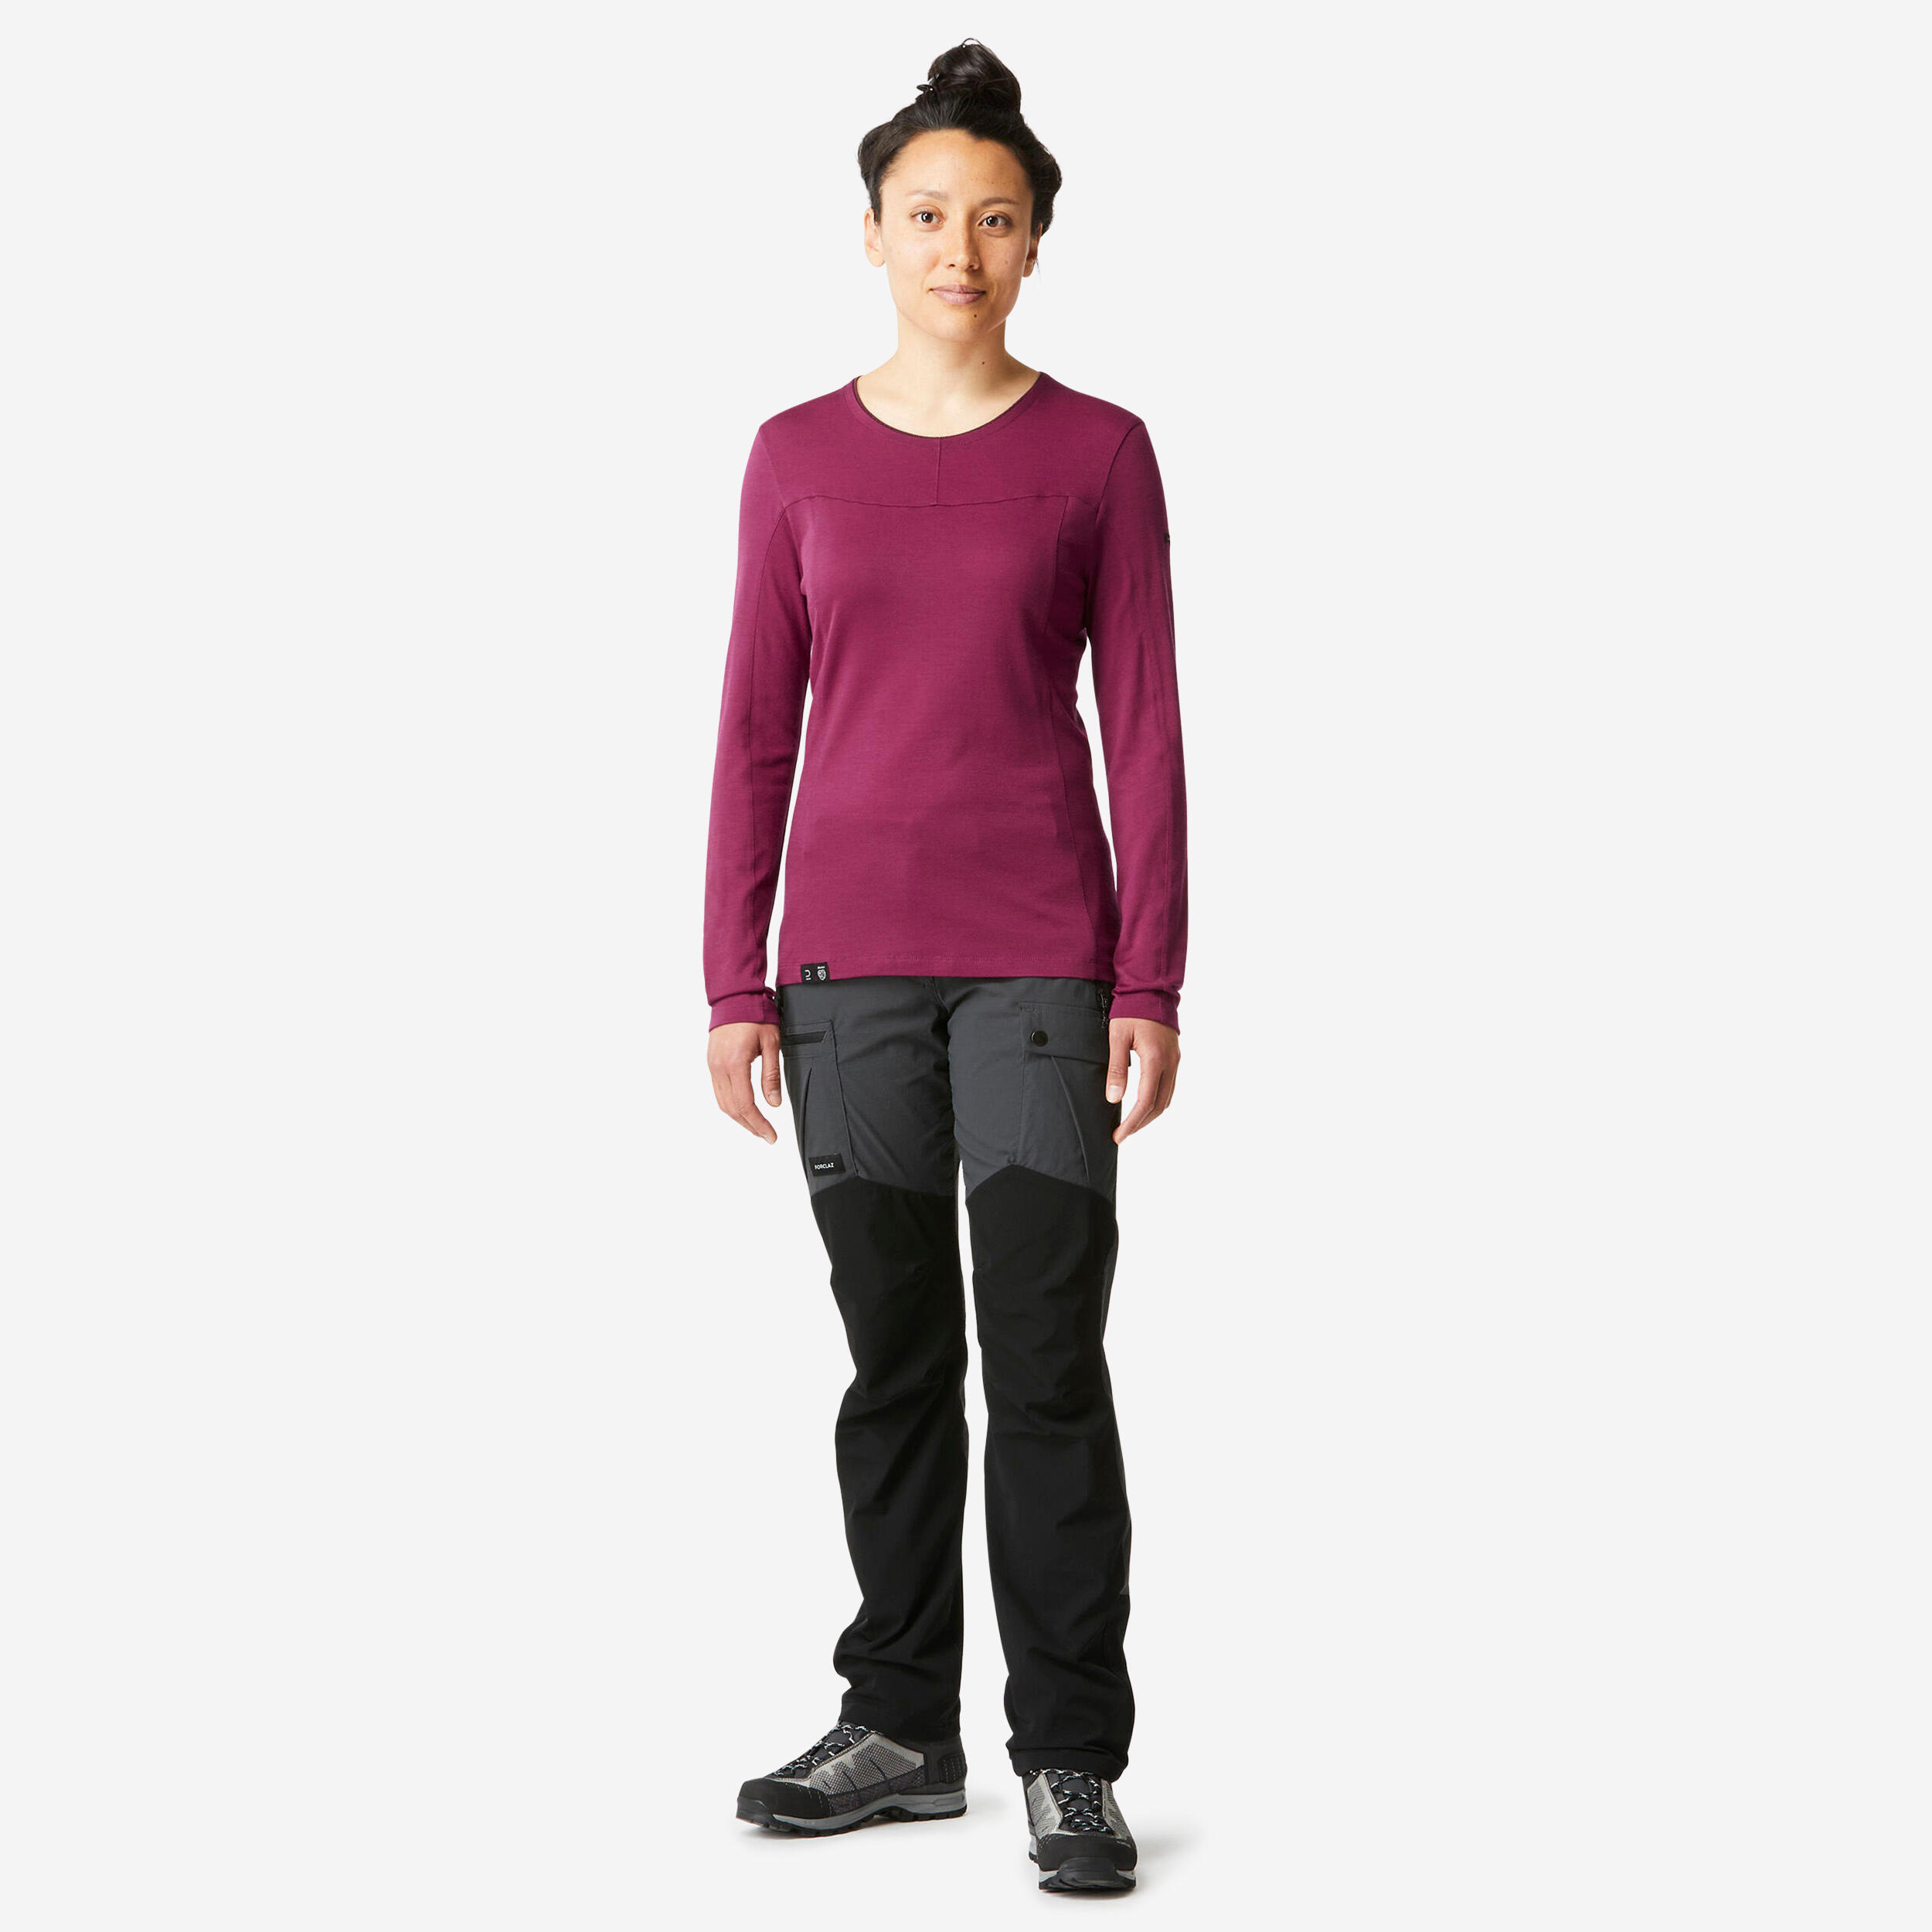 Women's MT500 long sleeve merino wool t-shirt  - BURGUNDY 2/4